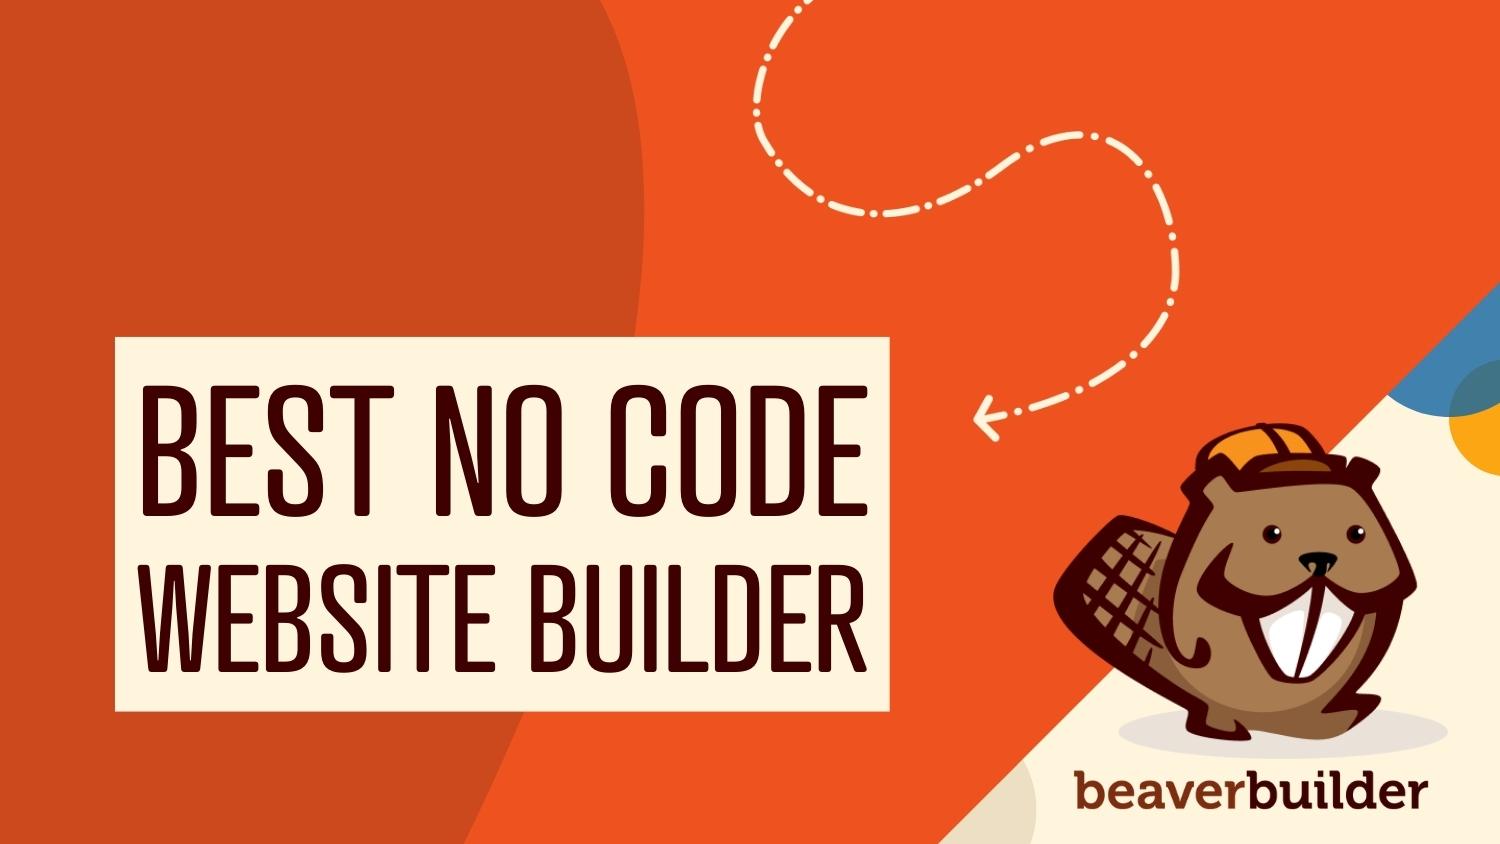 Best no code website builder | Beaver Builder blog